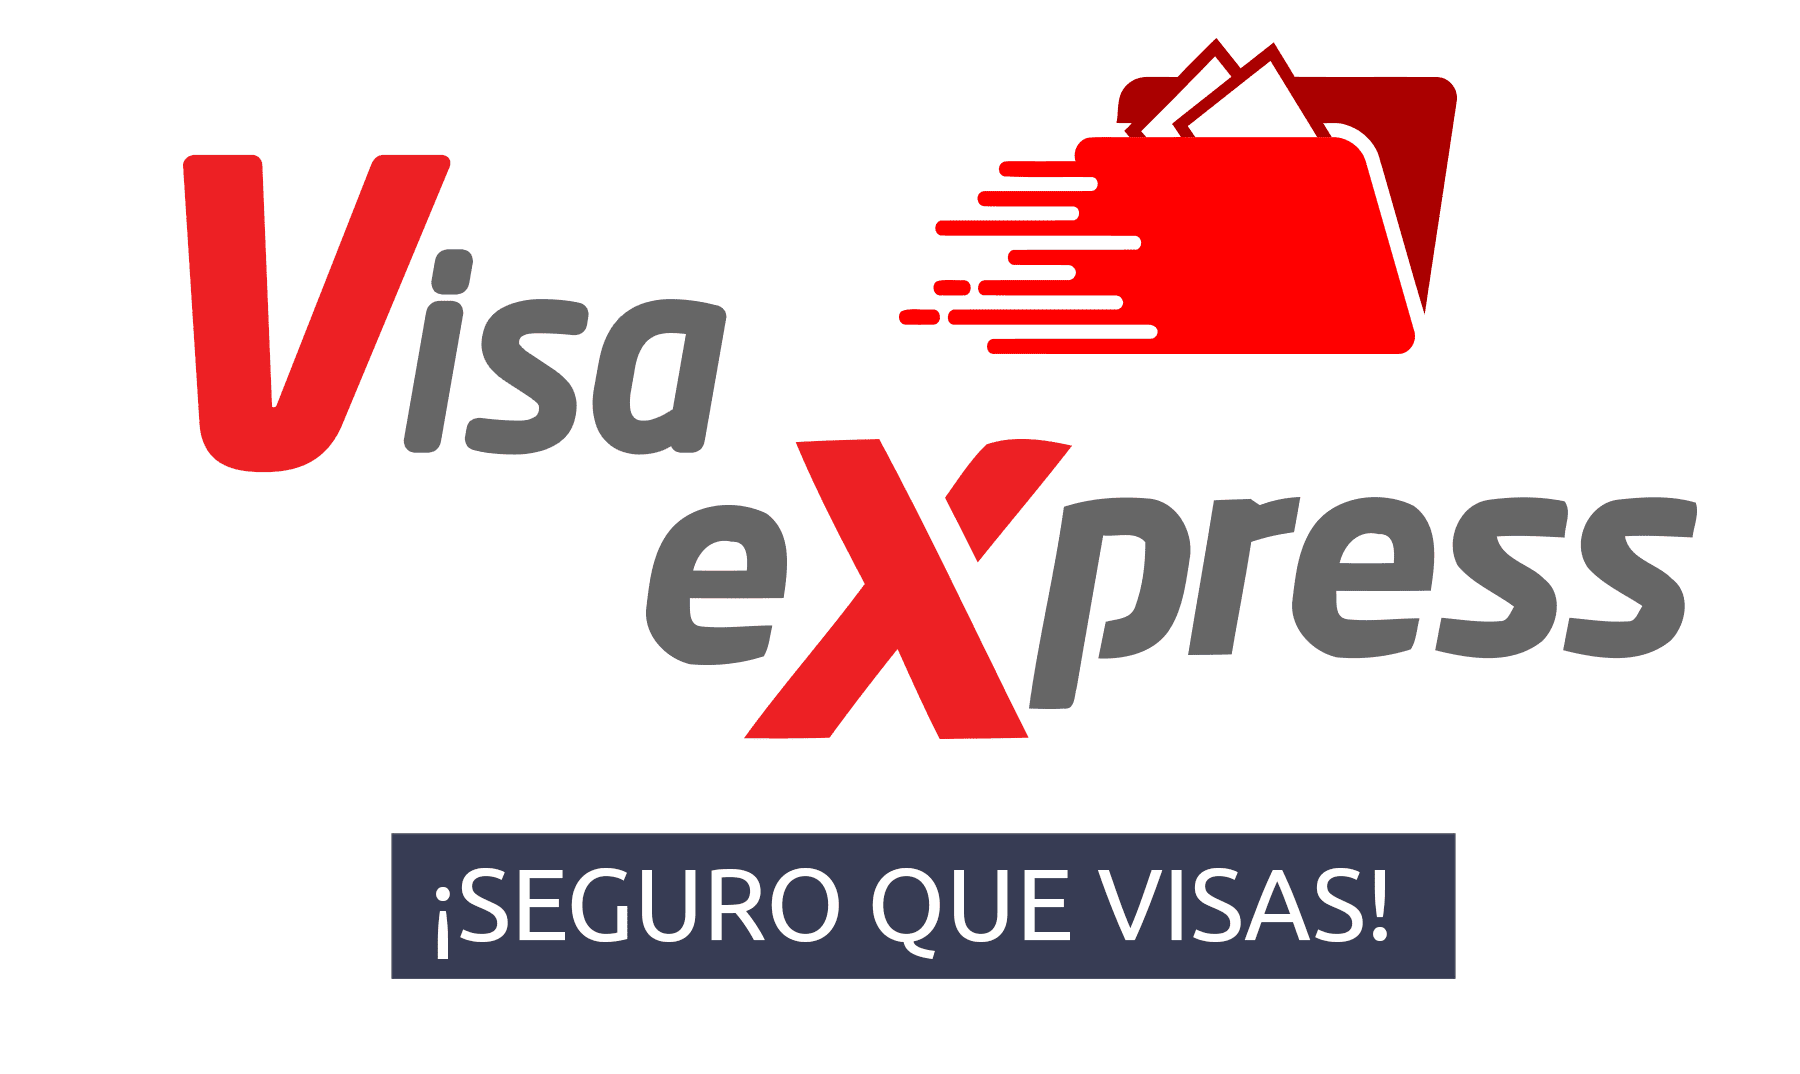 Visa Express